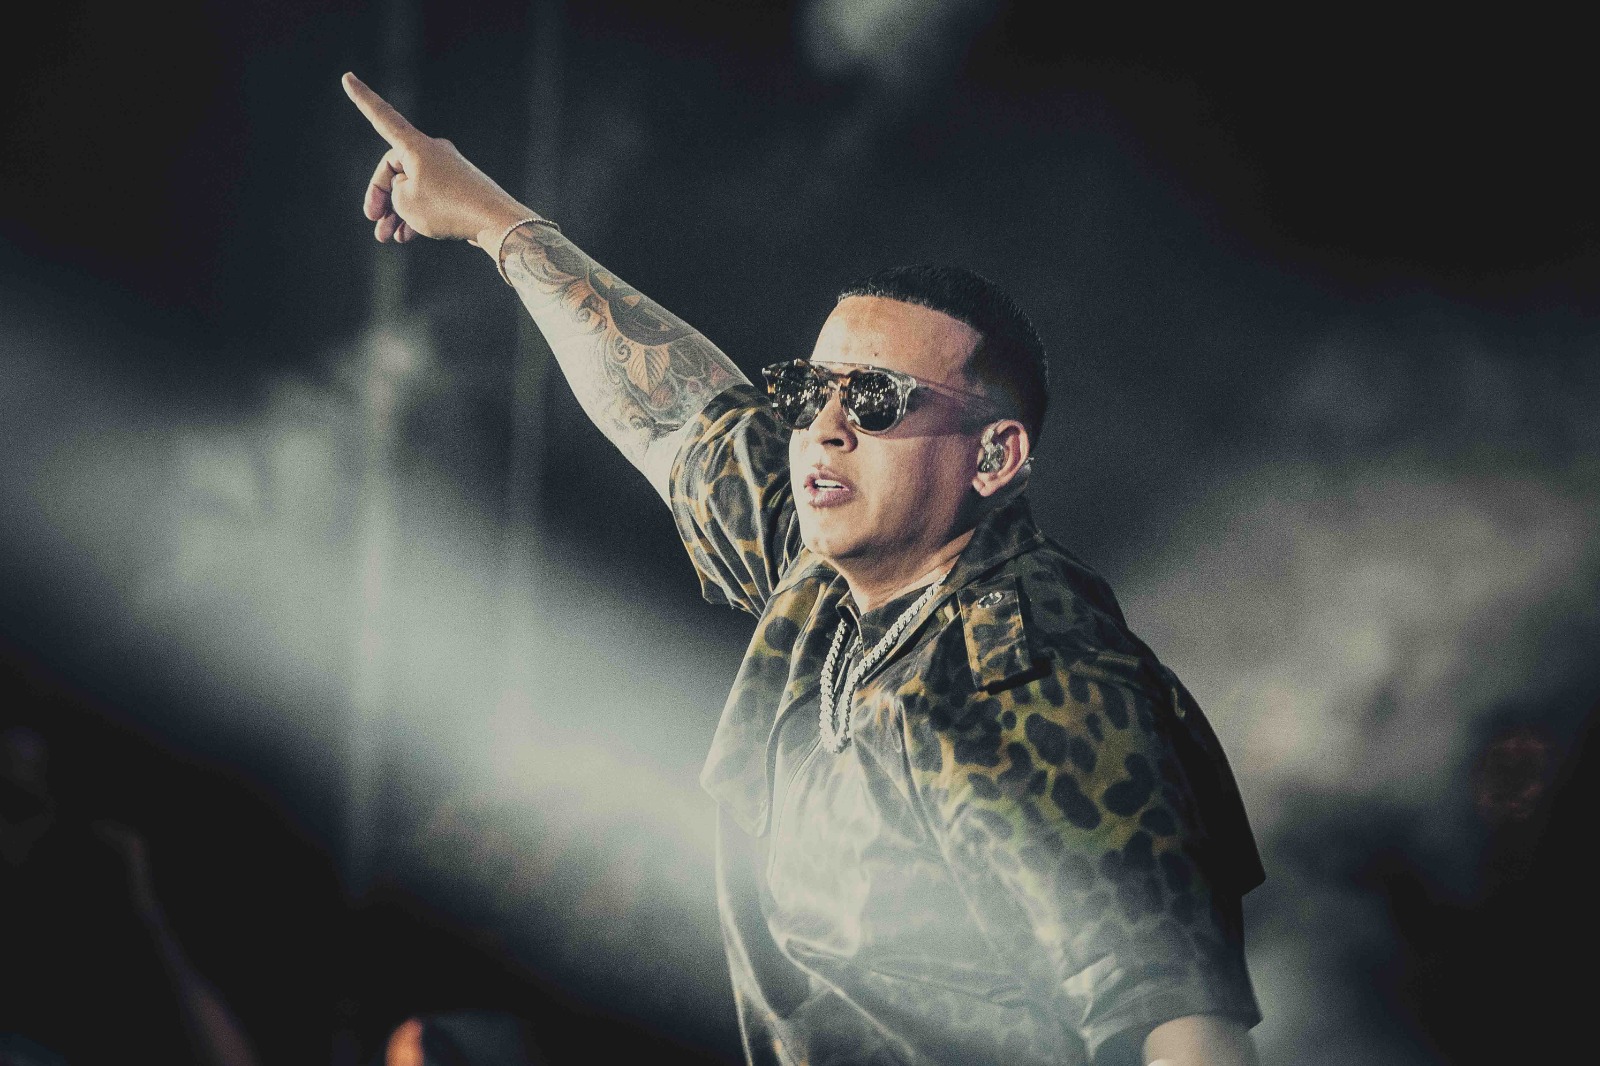 Fueled by 15 years of hits, Reggaeton king Daddy Yankee brings Latin